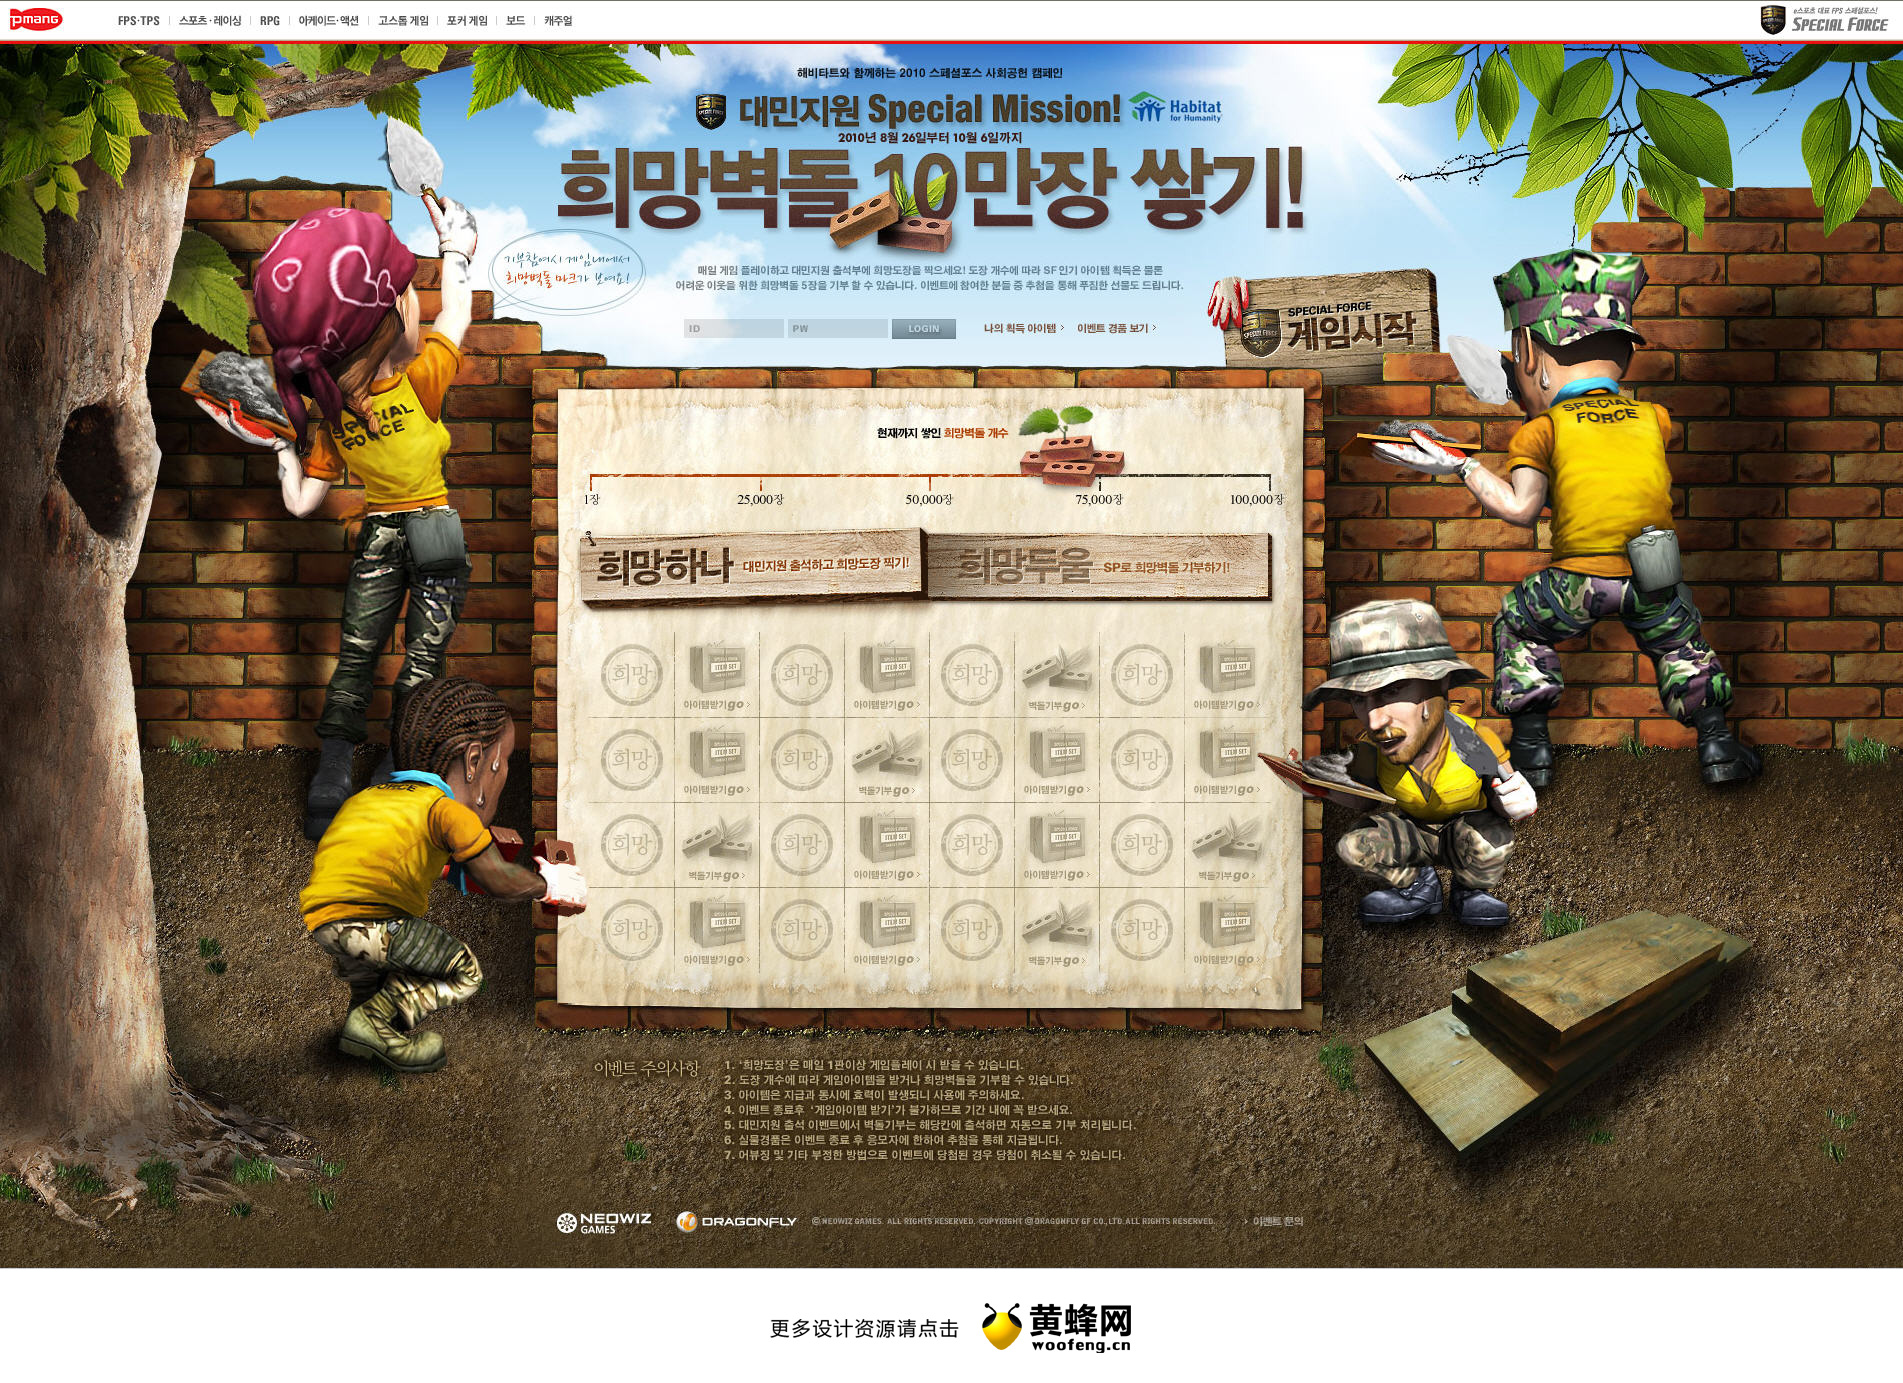 Pmang游戏网站专题页面设计欣赏0221，来源自黄蜂网https://woofeng.cn